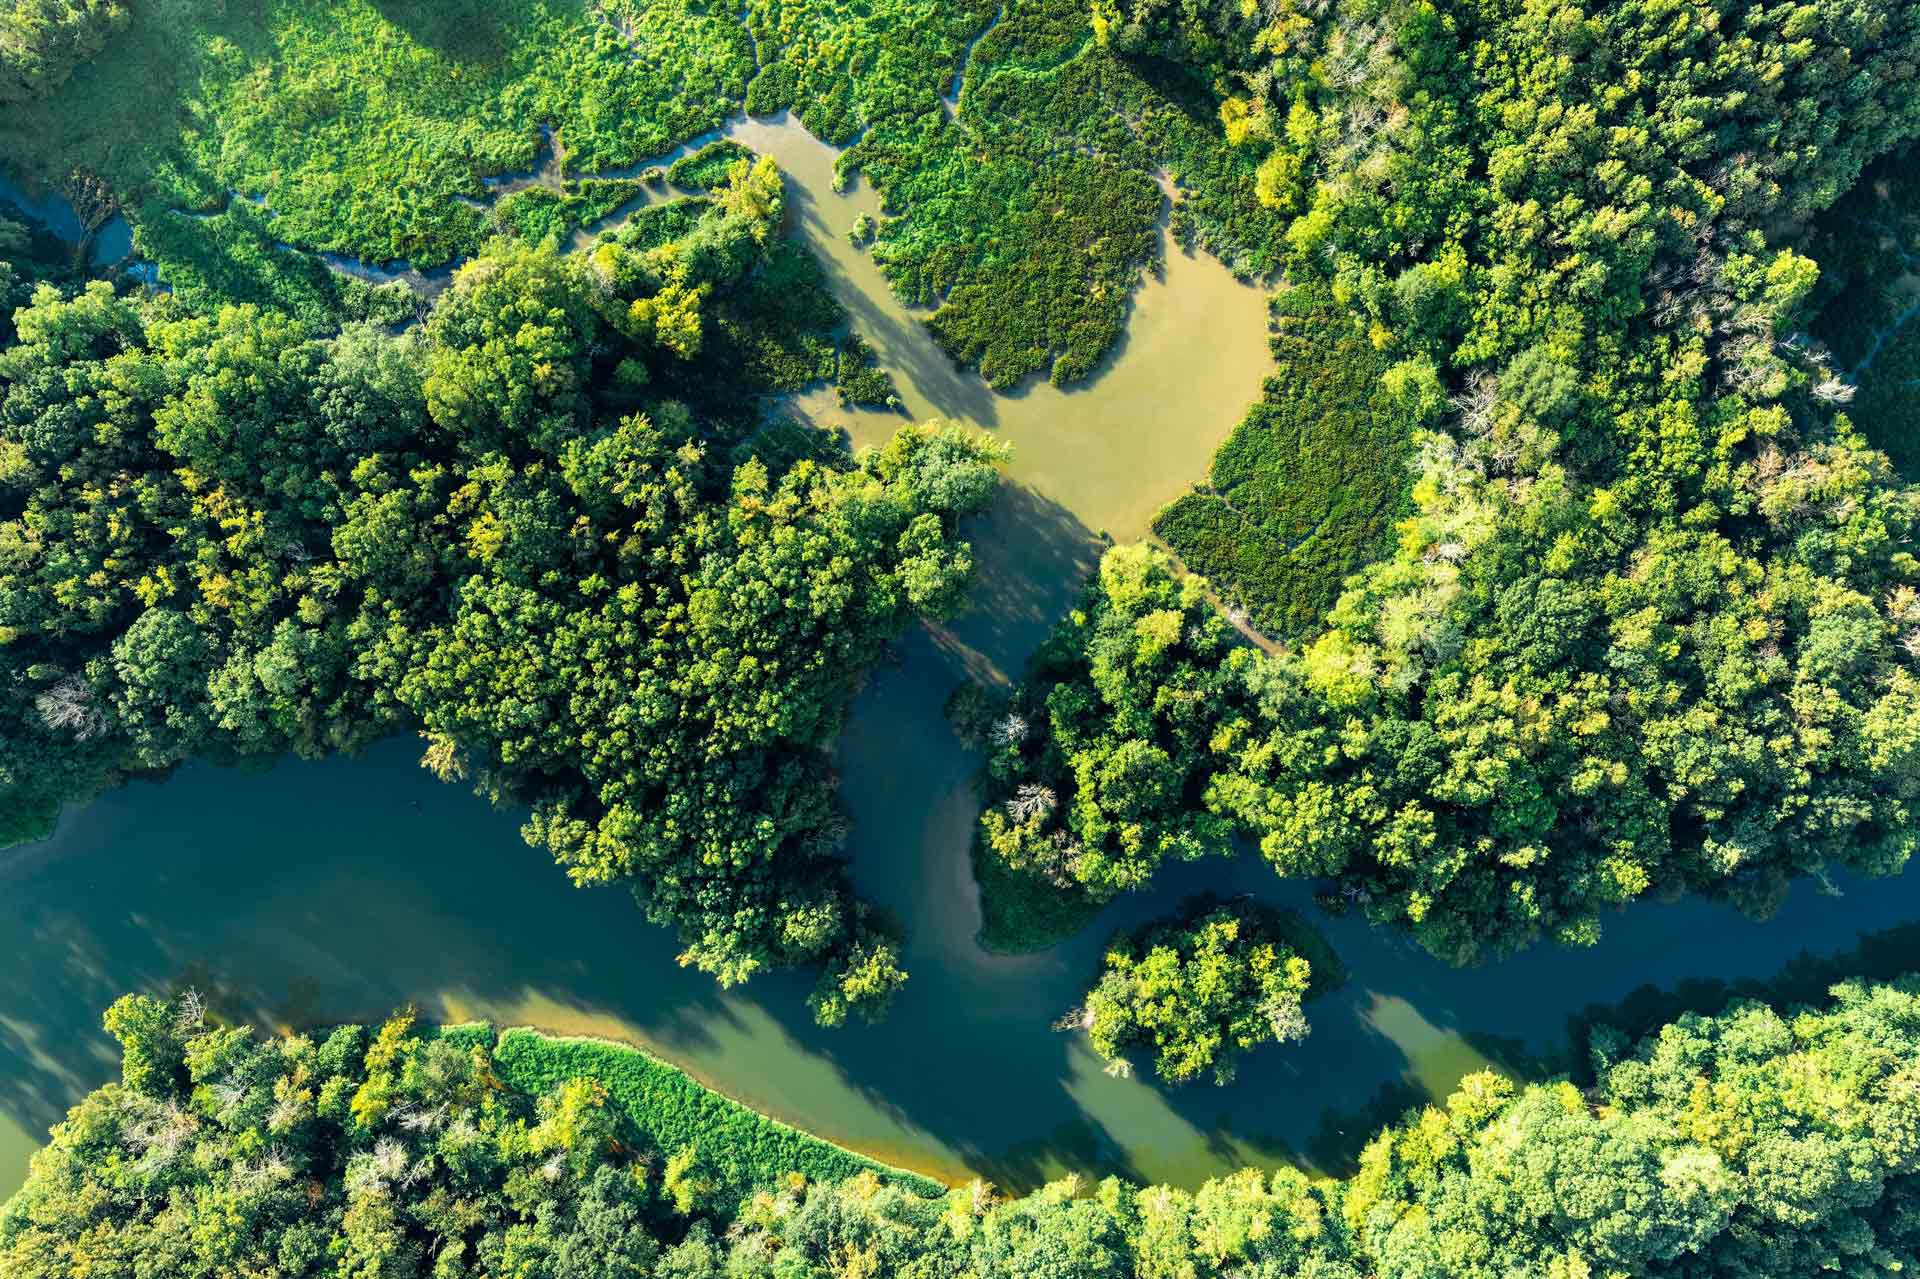 Jungle landscape with a river